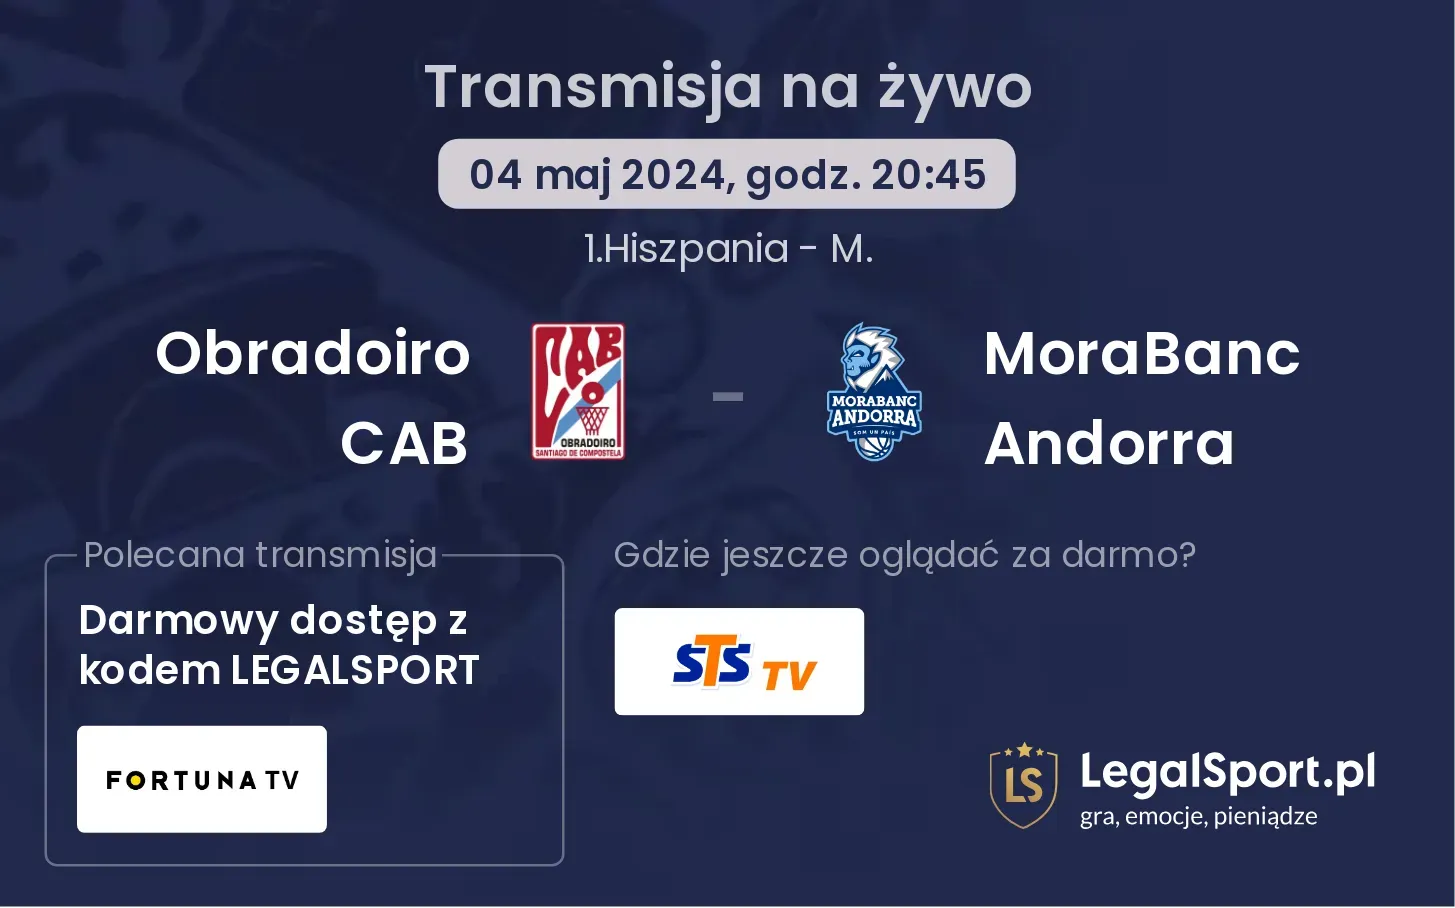 Obradoiro CAB - MoraBanc Andorra transmisja na żywo